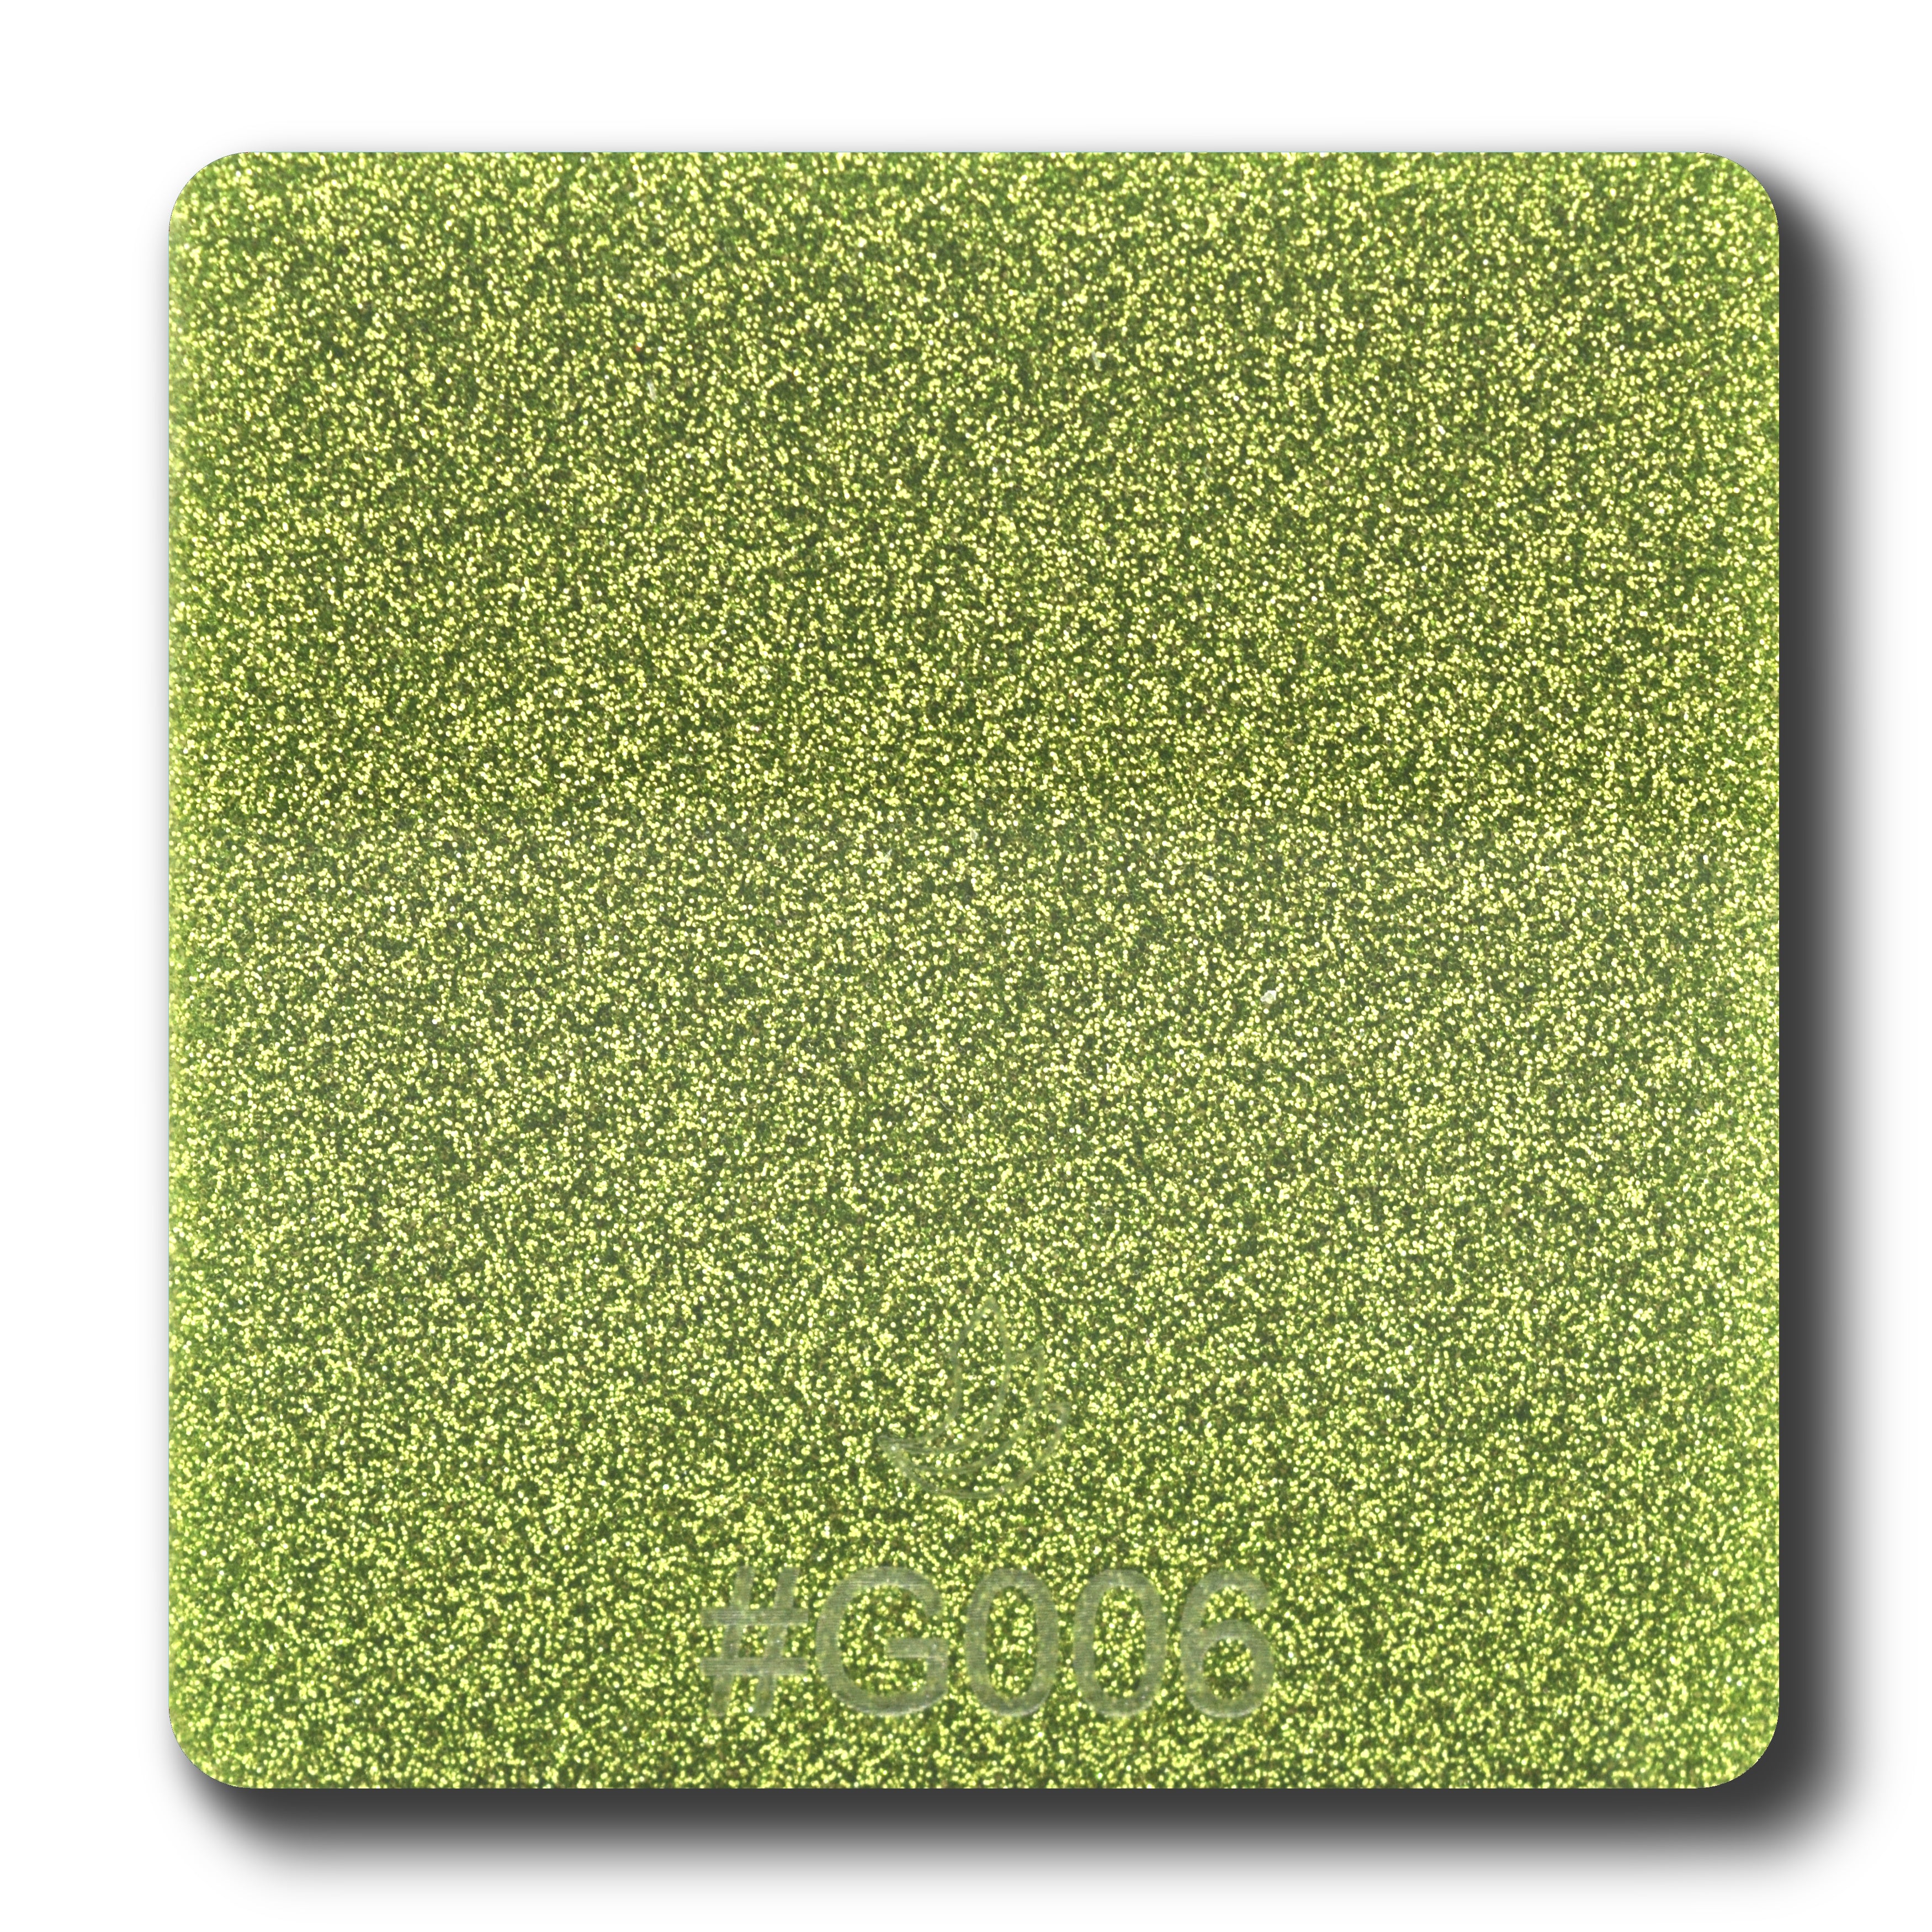 1/8" Light Green Glitter Two-Sided Acrylic Sheet